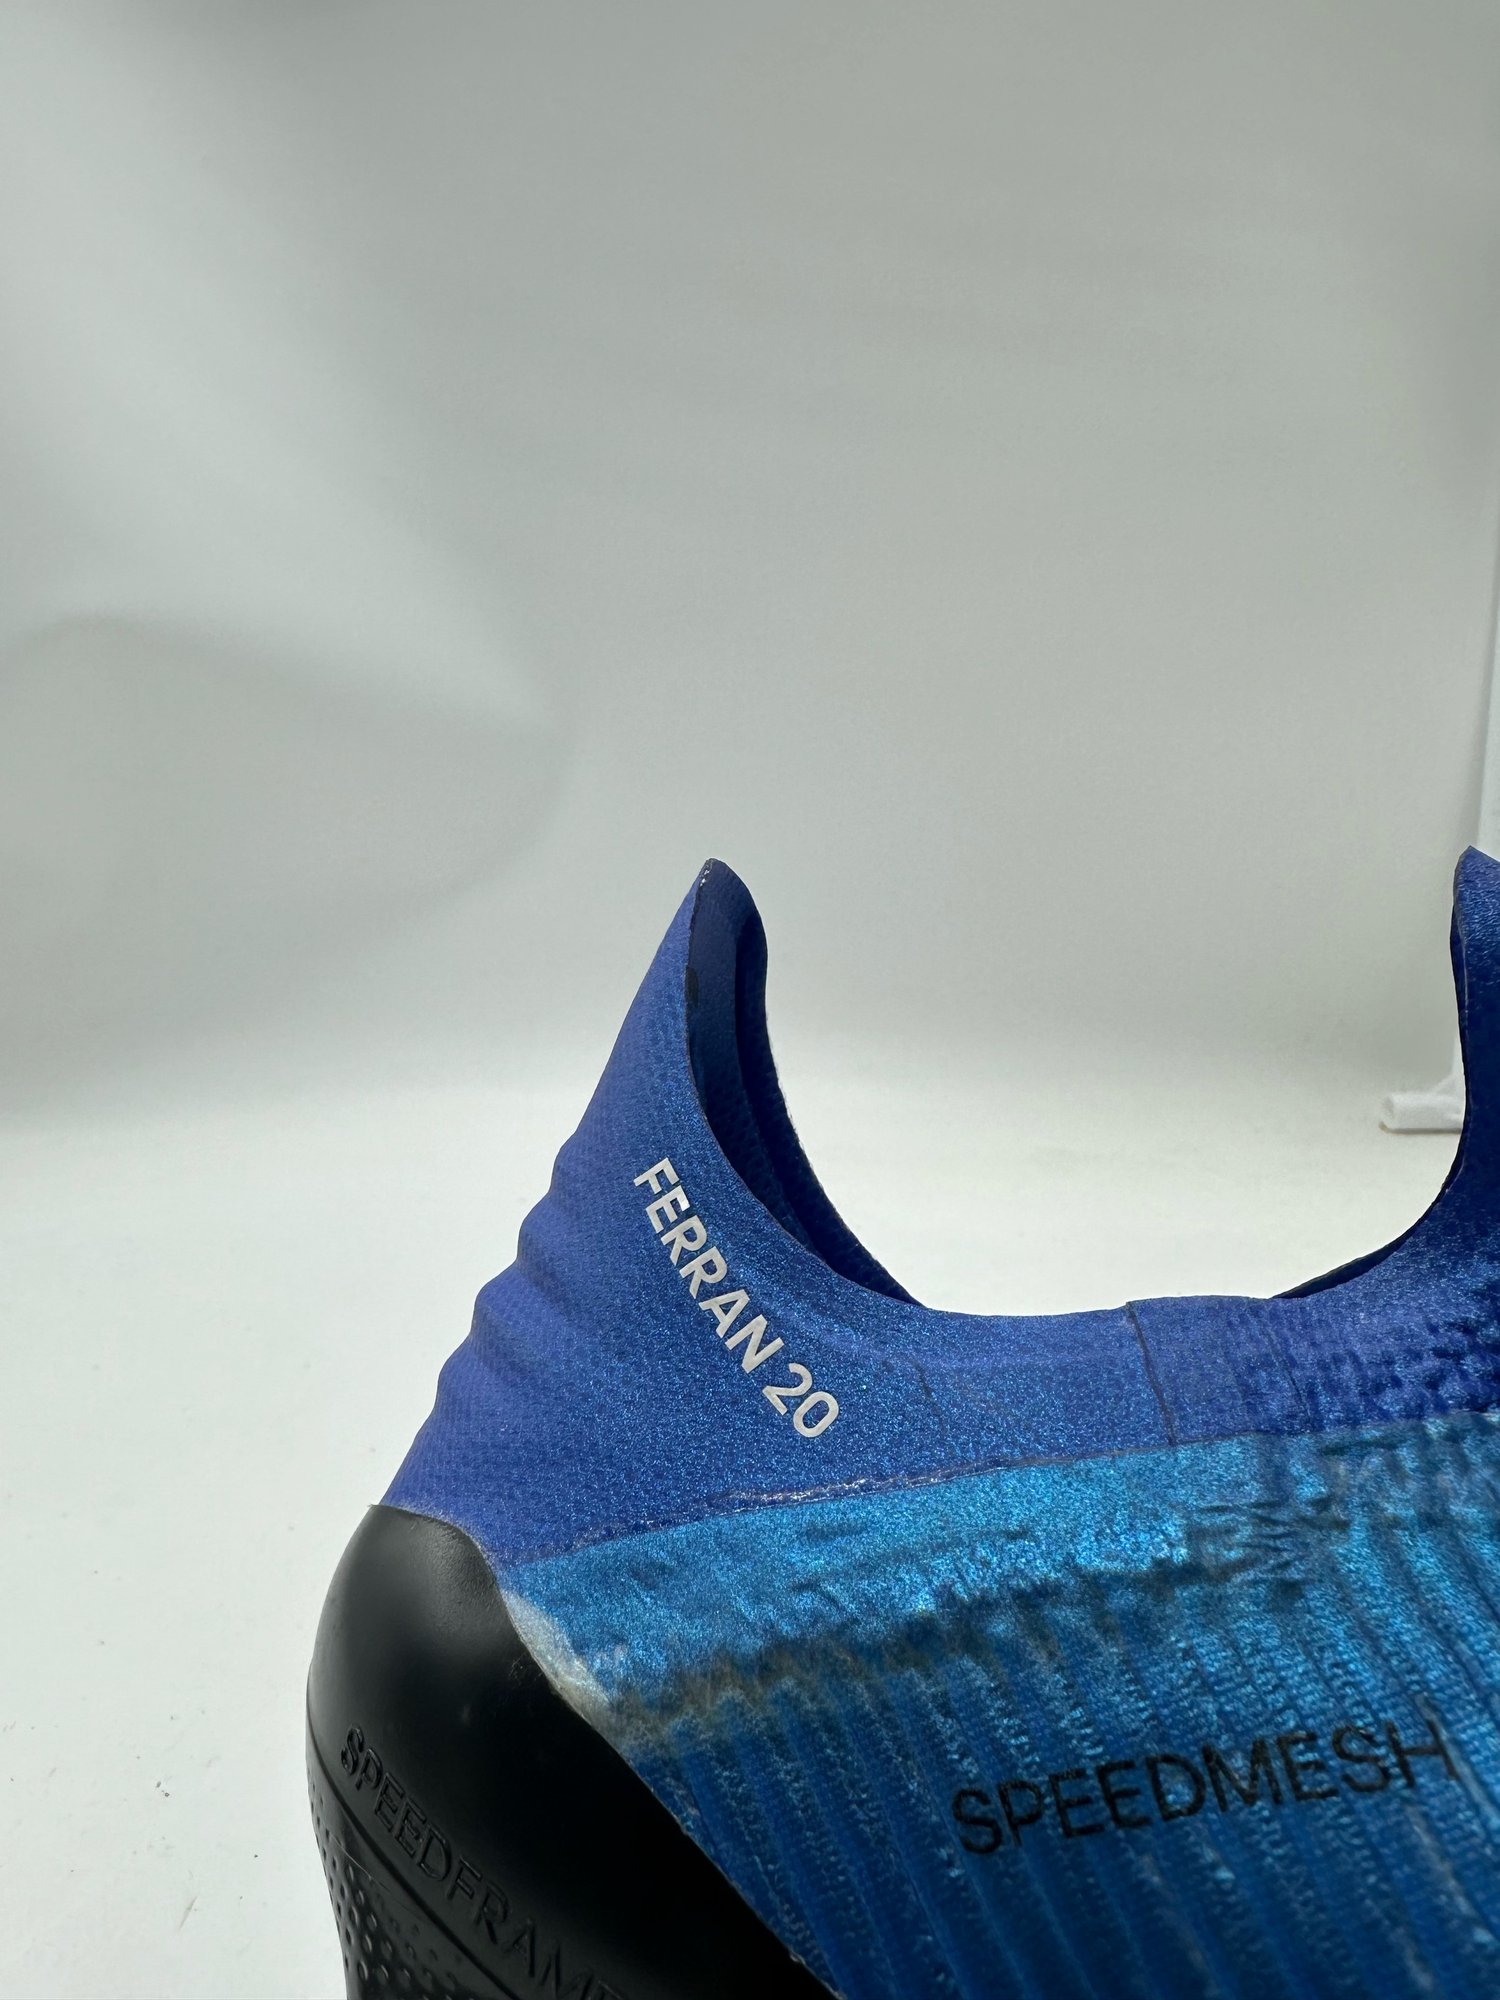 Image of Adidas 19.1 FG Blue Torres 